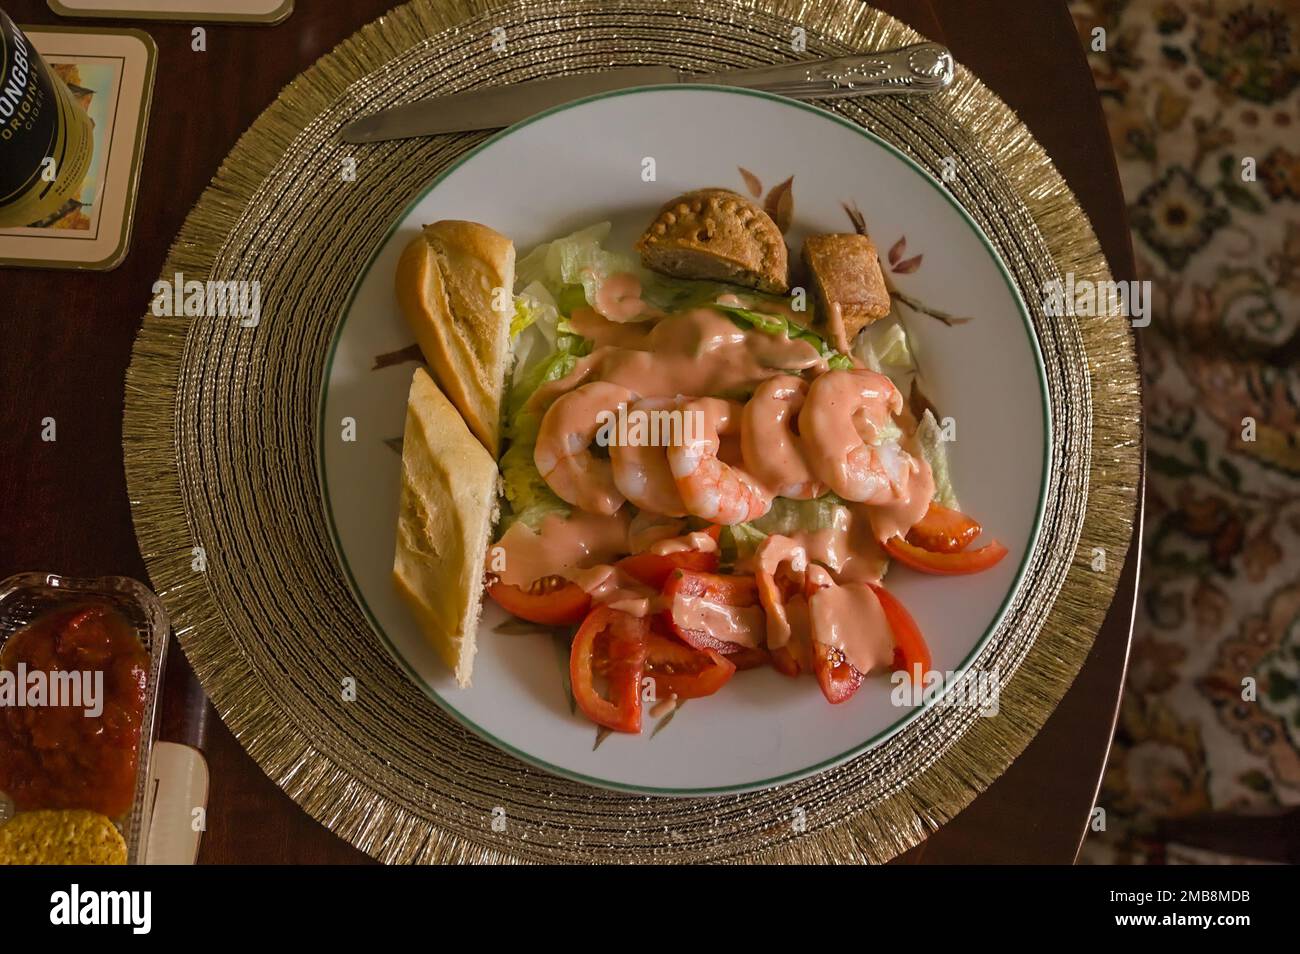 A tasty shrimp salad meal with a pork pie on a table setting Stock Photo